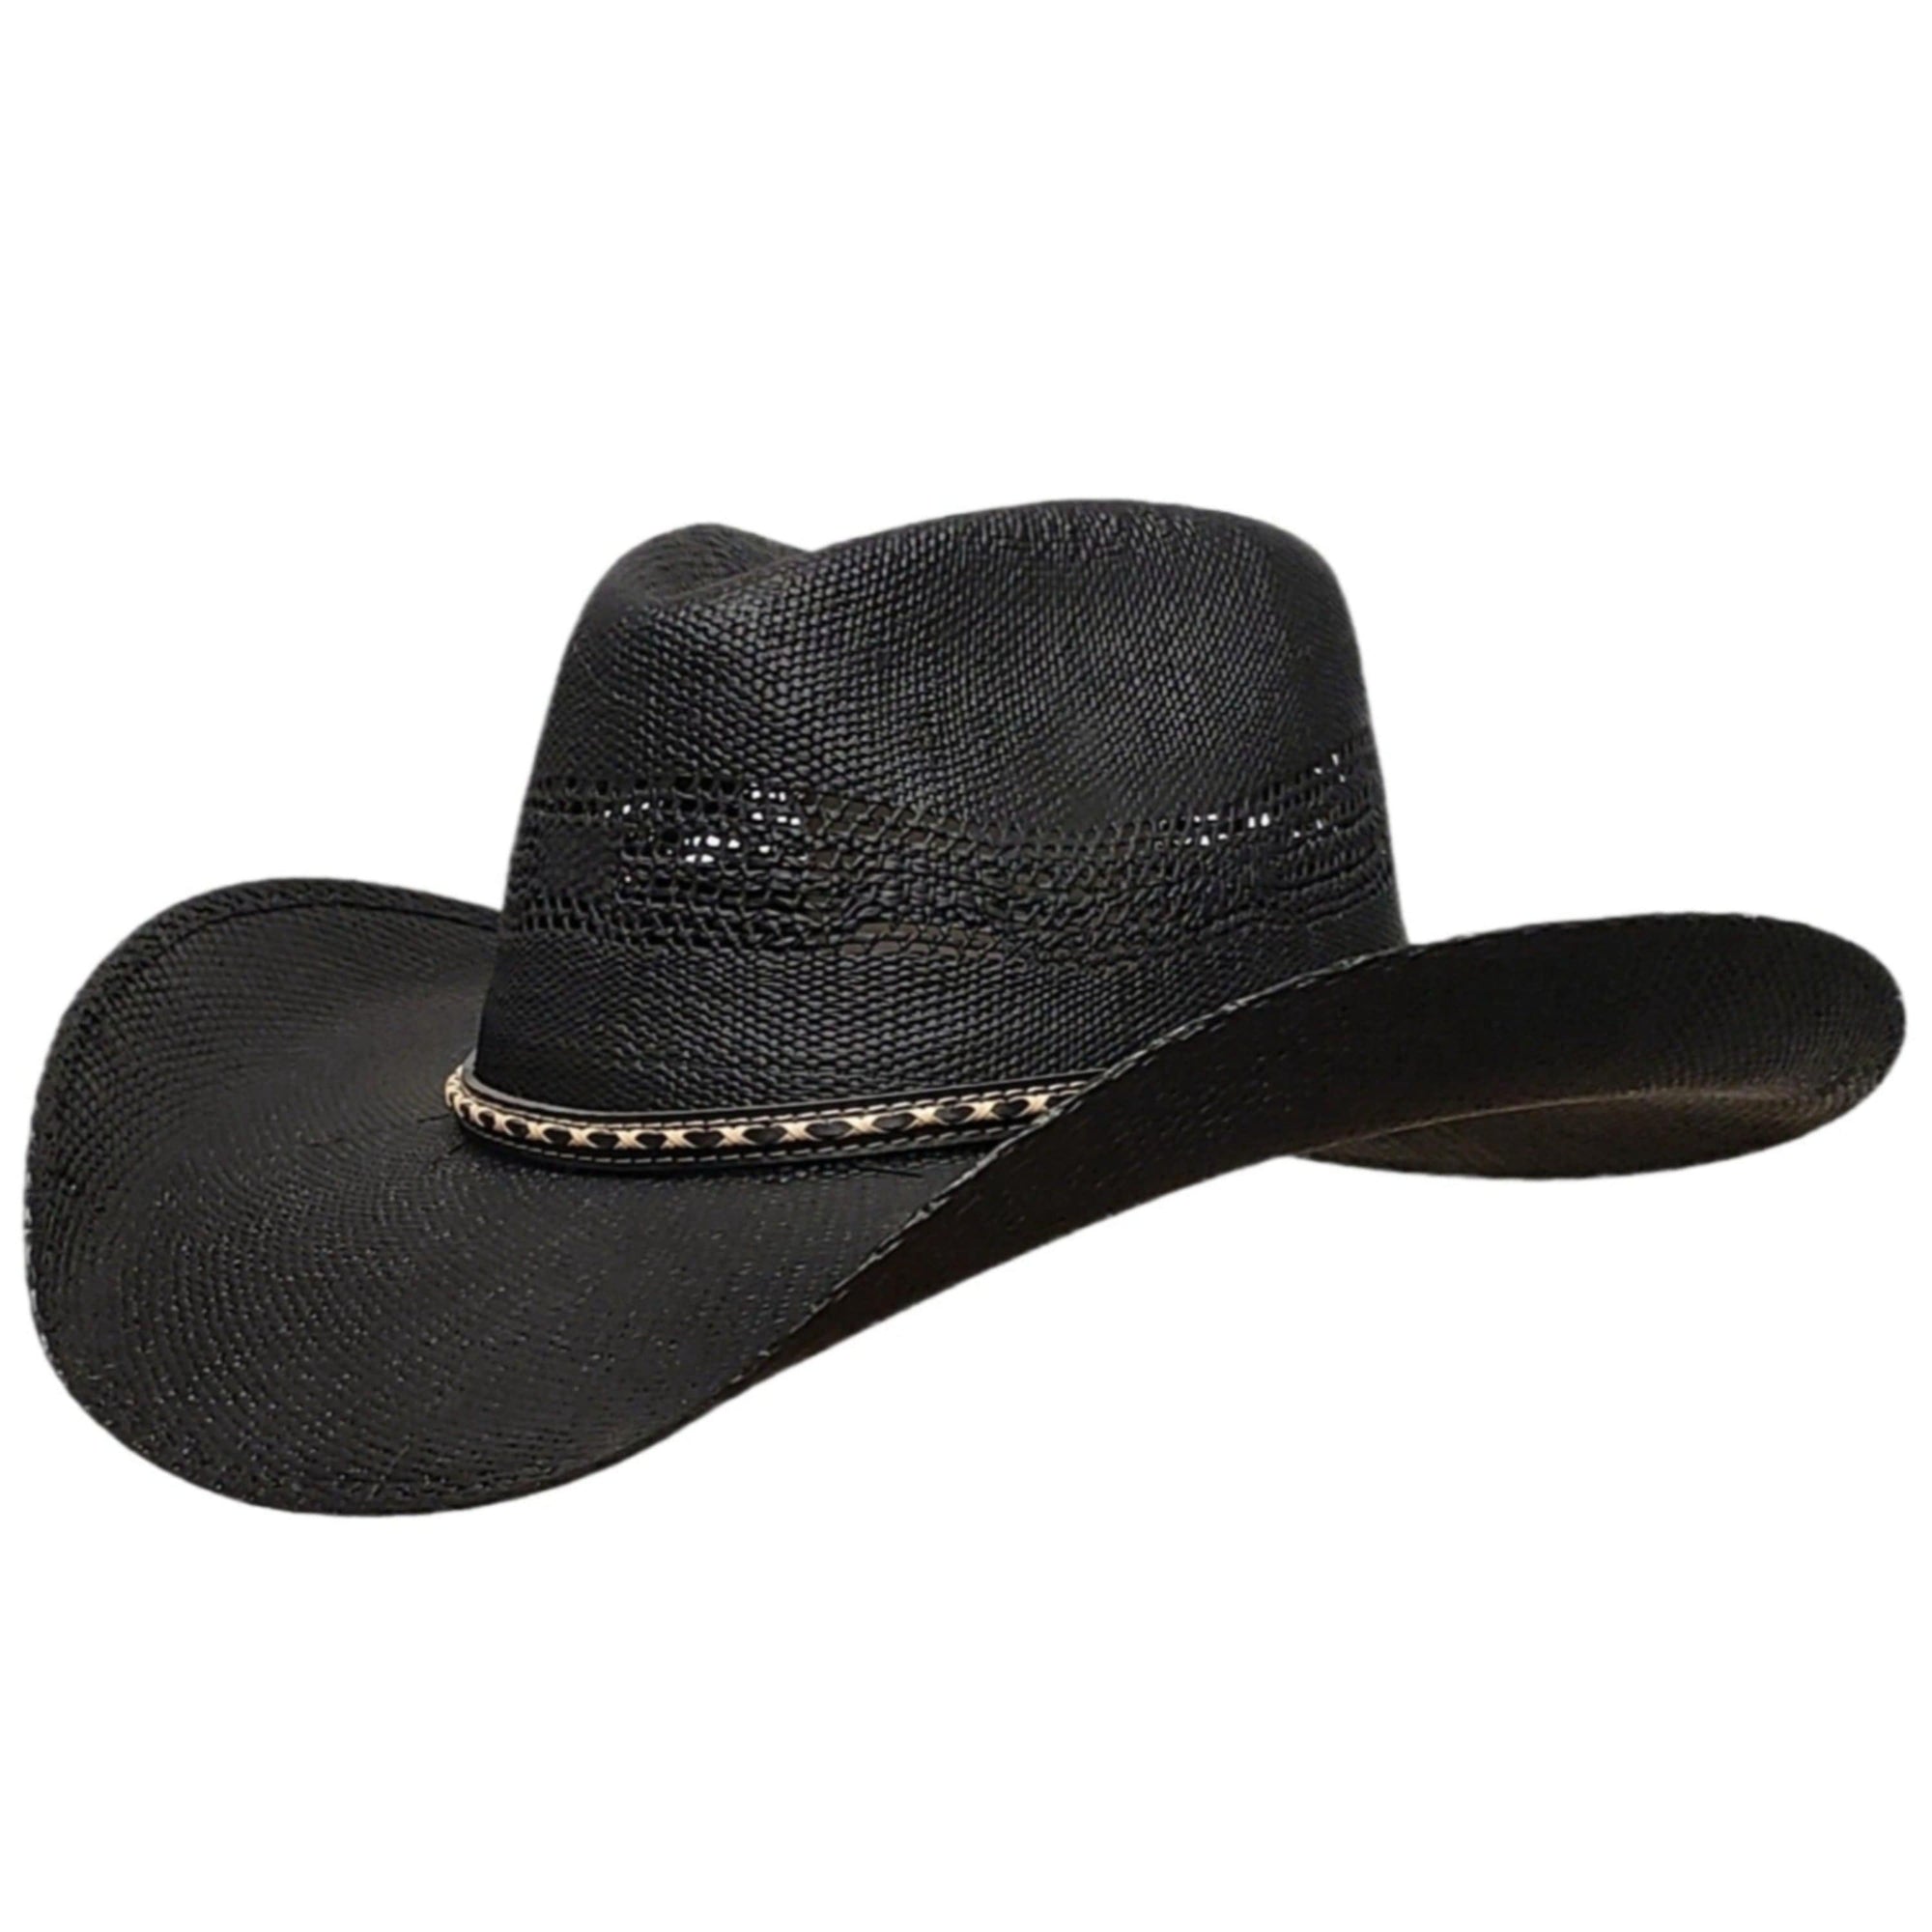 Gone Country Hats Men & Women's Hats Small  fits 6-7/8 to 7 Sambora Black - Straw Shantung